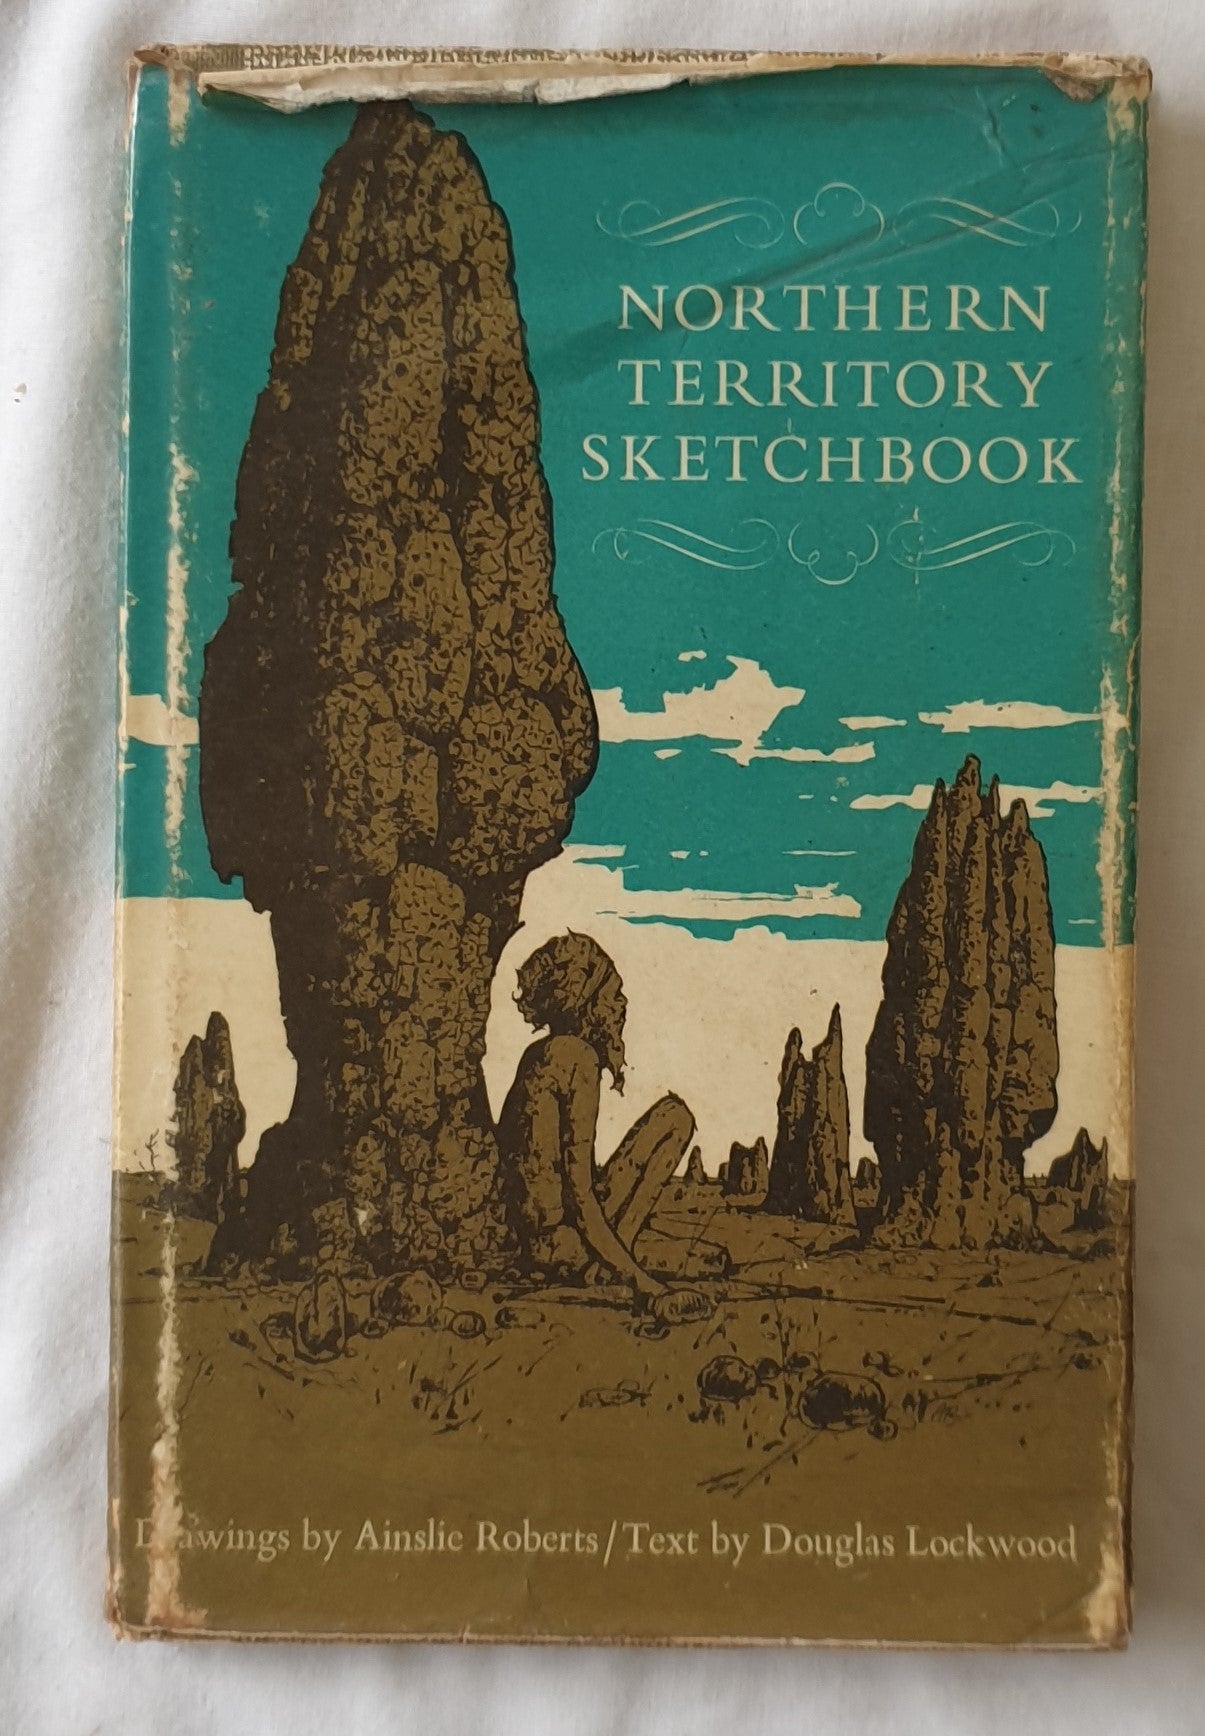 Northern Territory Sketchbook  Drawings by Ainslie Roberts  Text by Douglas Lockwood